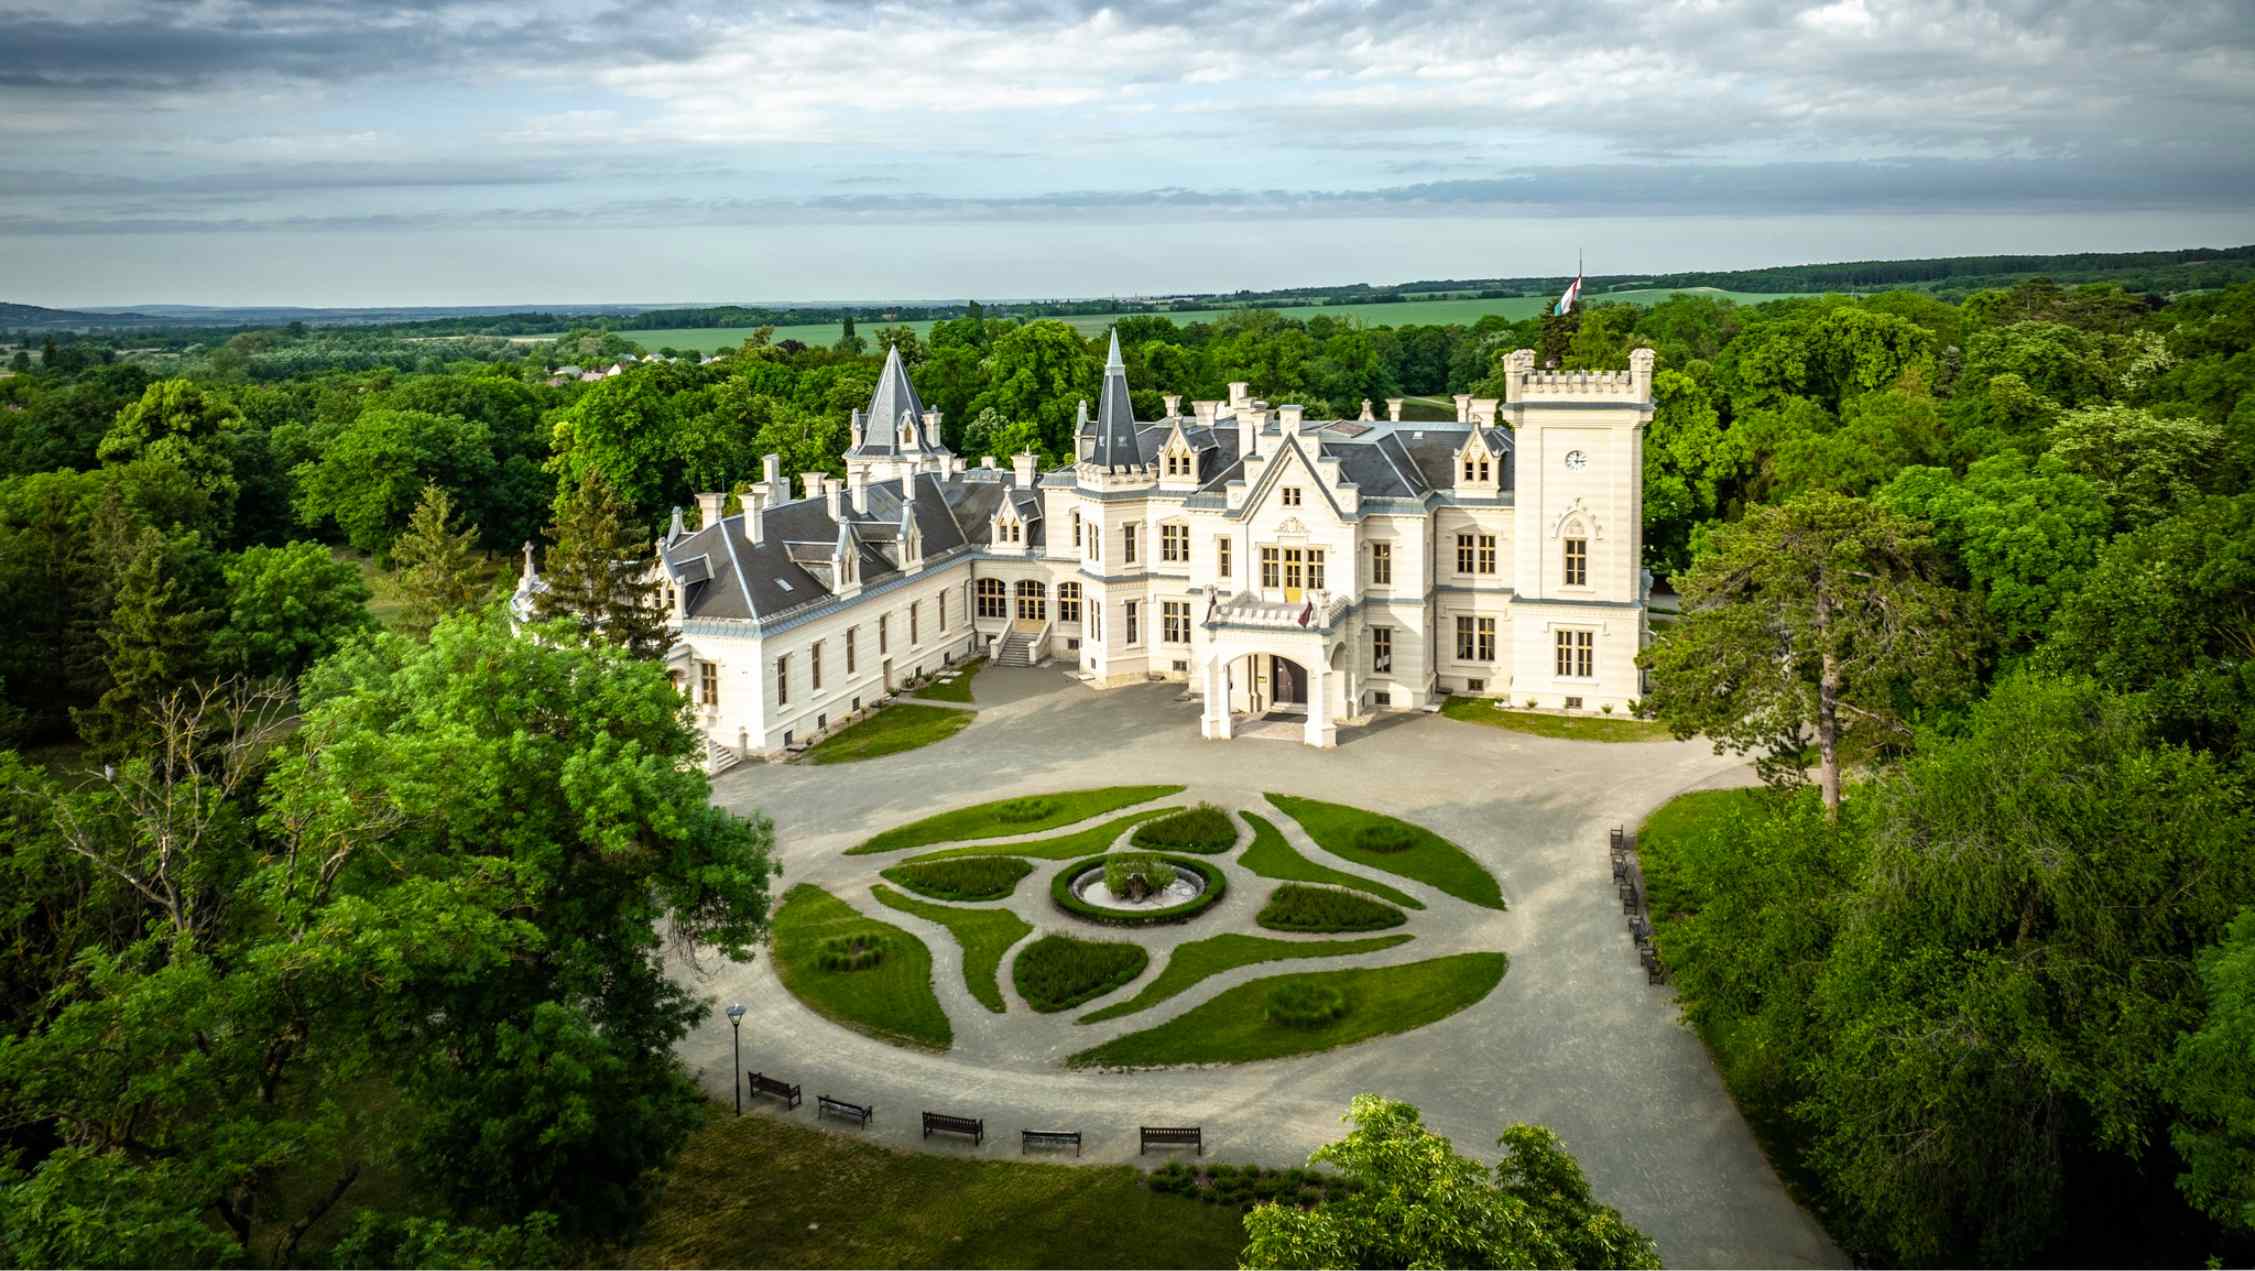 Mađarski dvorci koje treba posjetiti zimi - dvorac Nádasdy